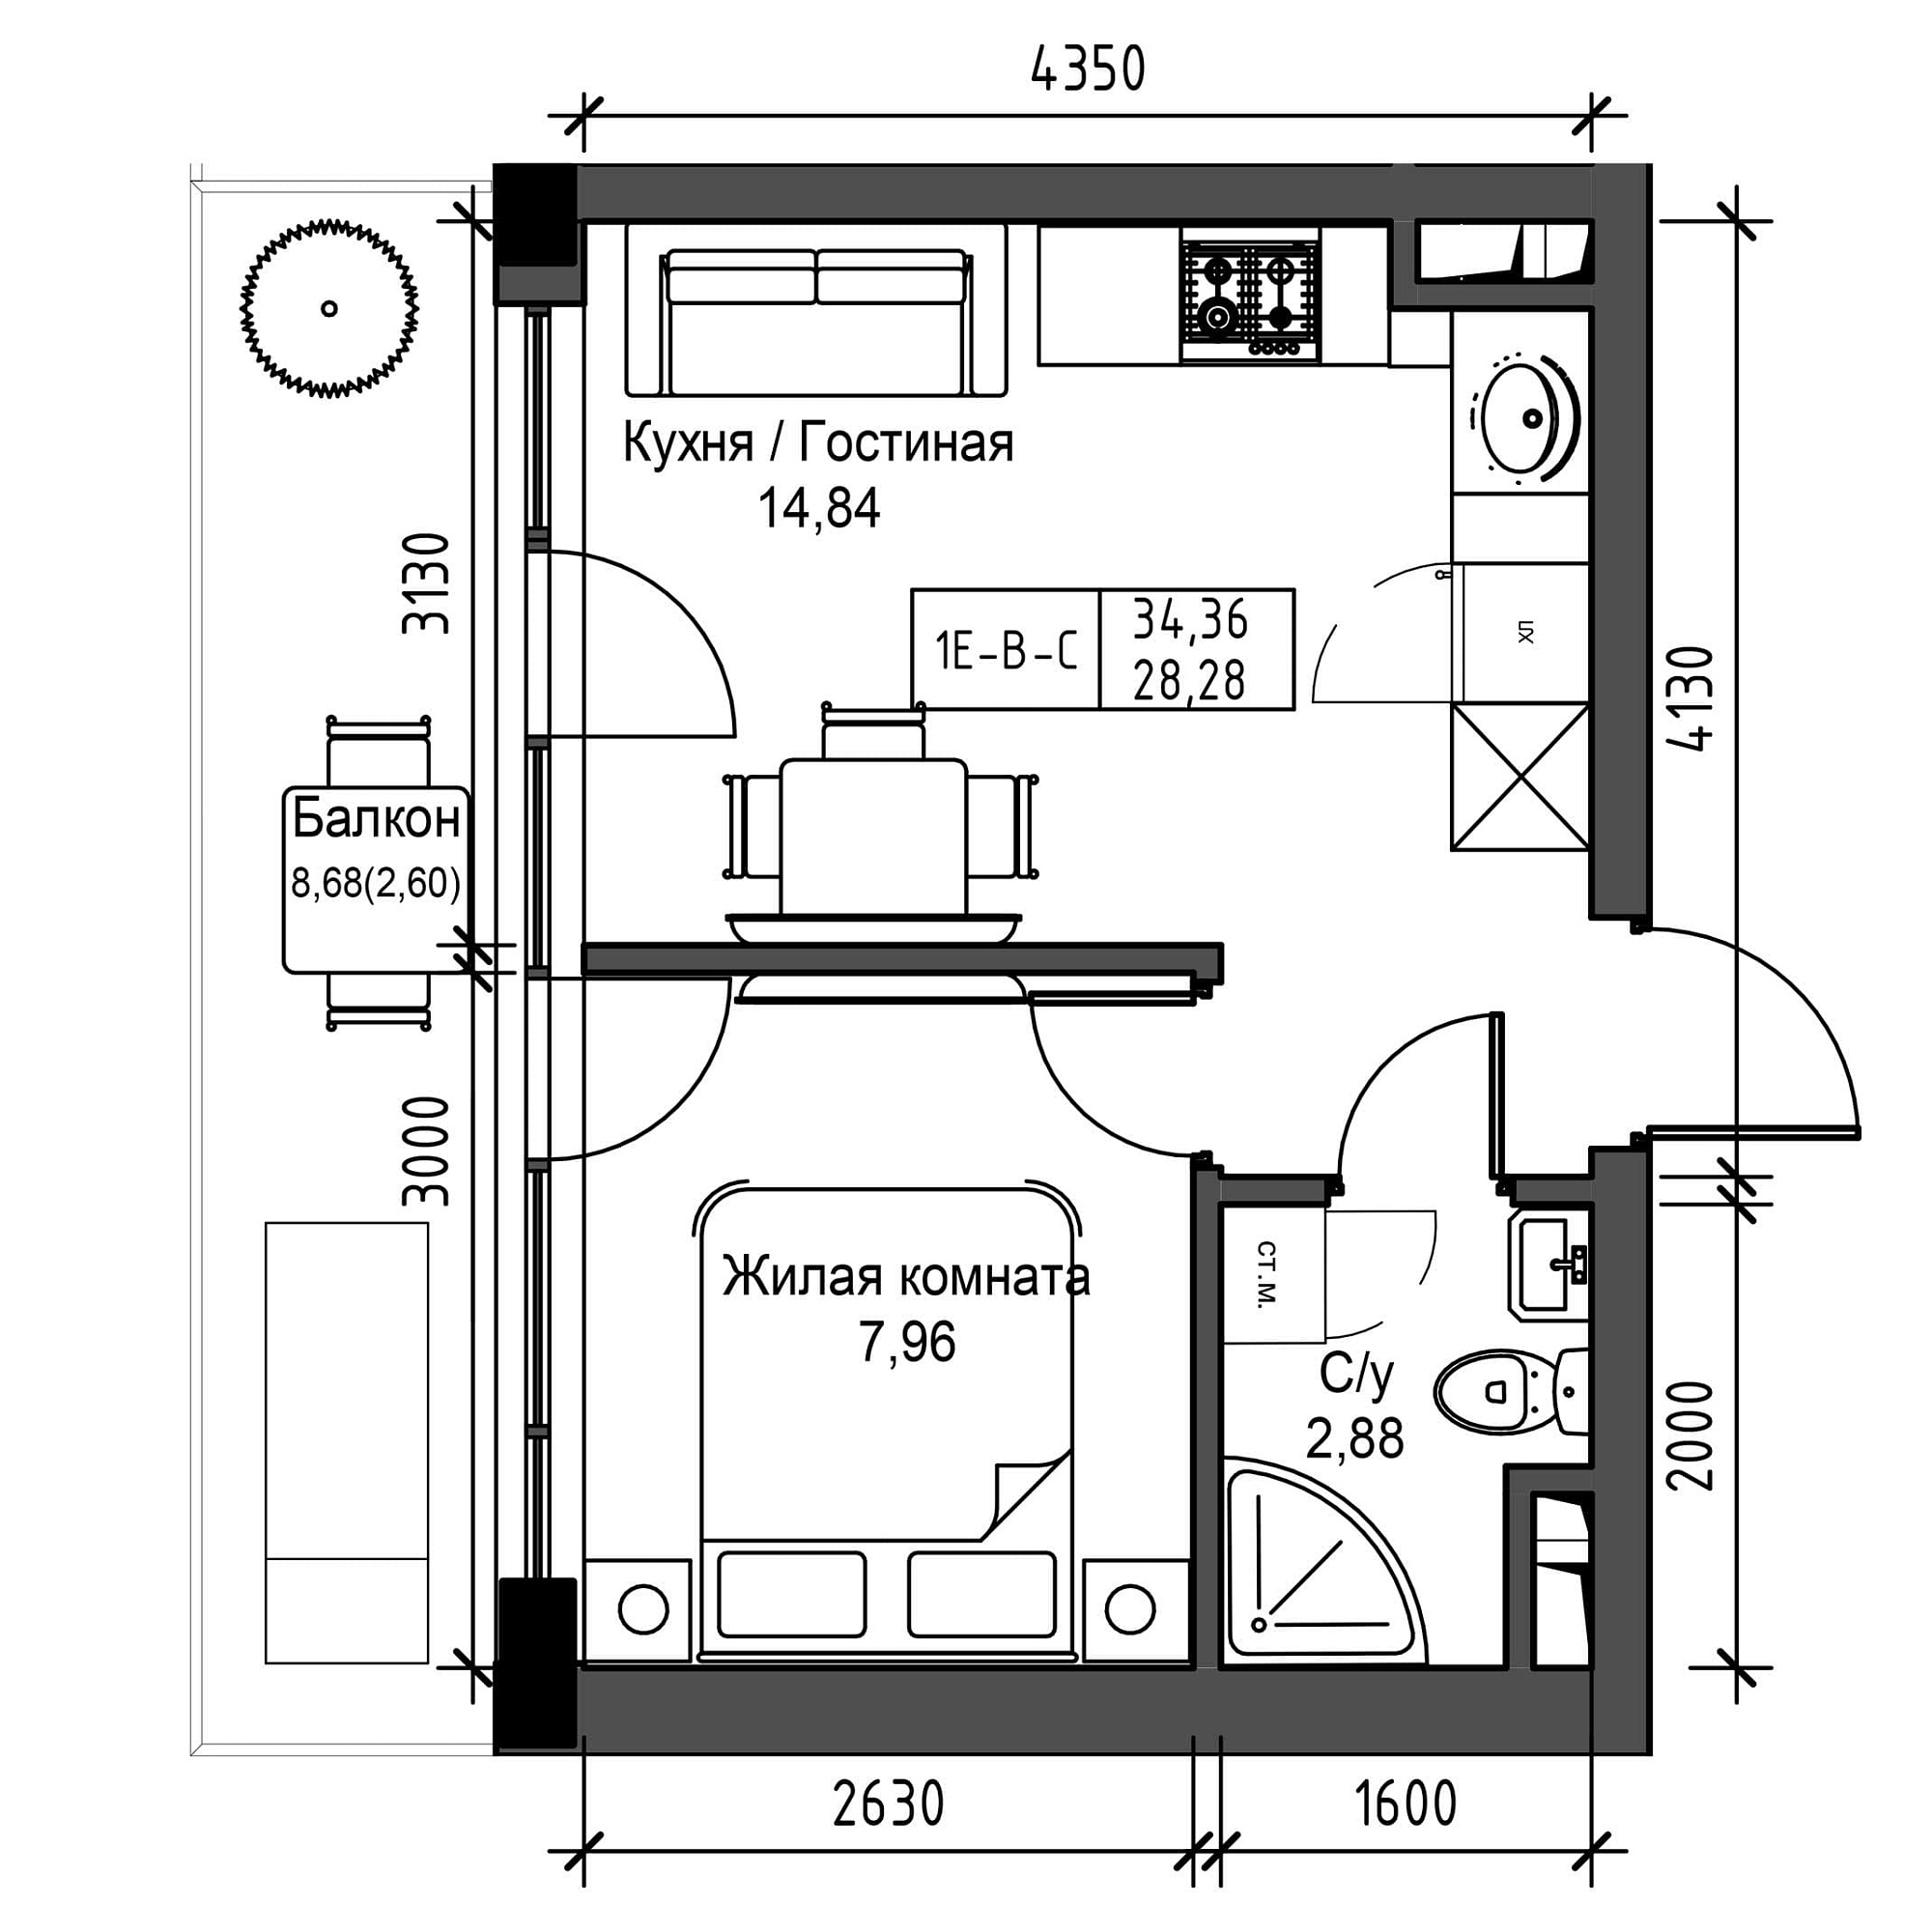 Planning 1-rm flats area 28.28m2, UM-001-09/0014.